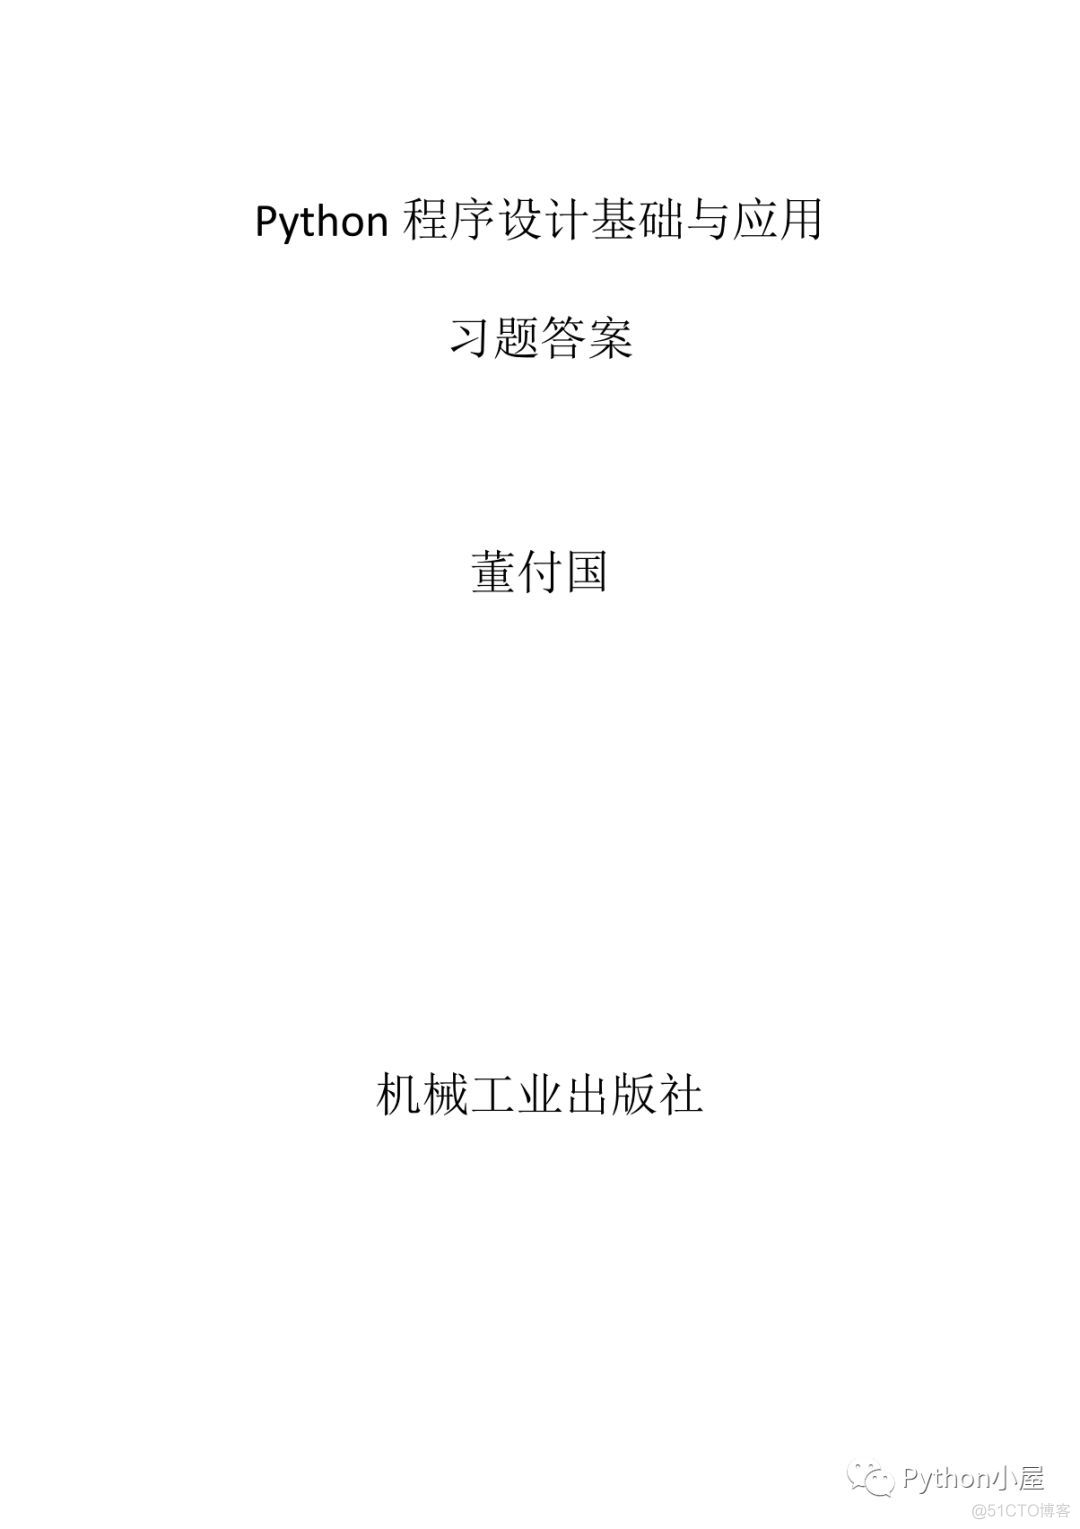 《Python程序设计基础与应用》课后习题答案_python